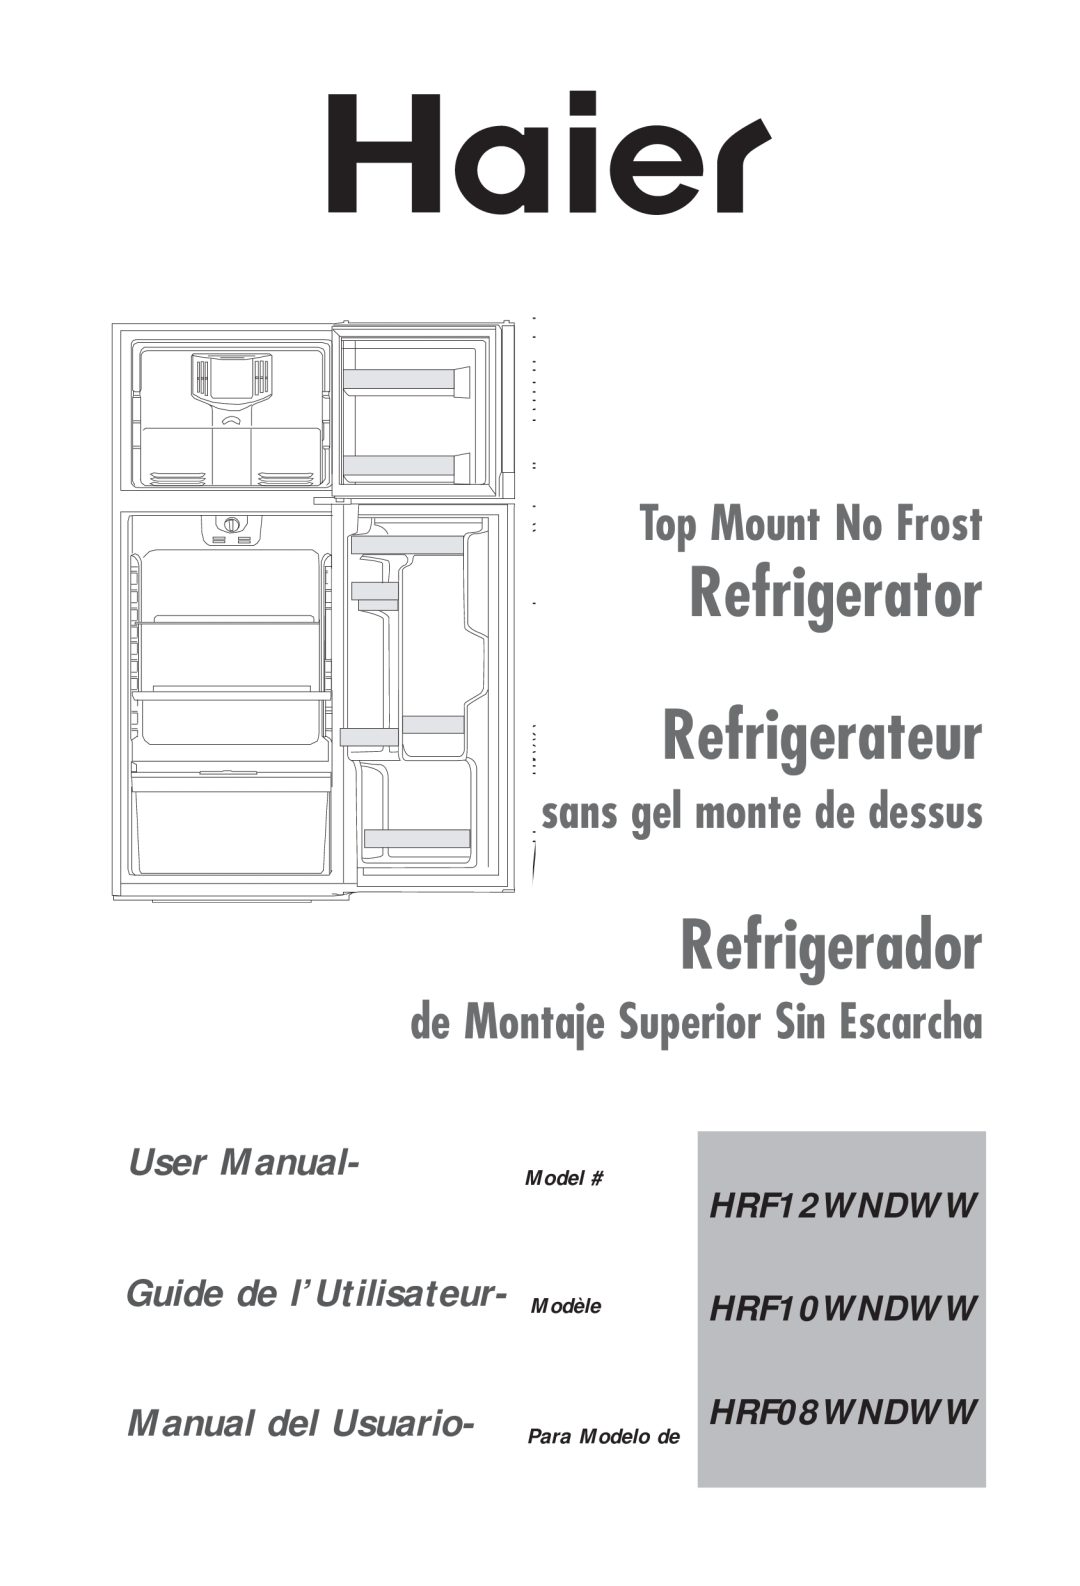 Haier user manual Model # Modèle, Refrigerator Refrigerateur, Refrigerador, HRF12WNDWW HRF10WNDWW, Top Mount No Frost 